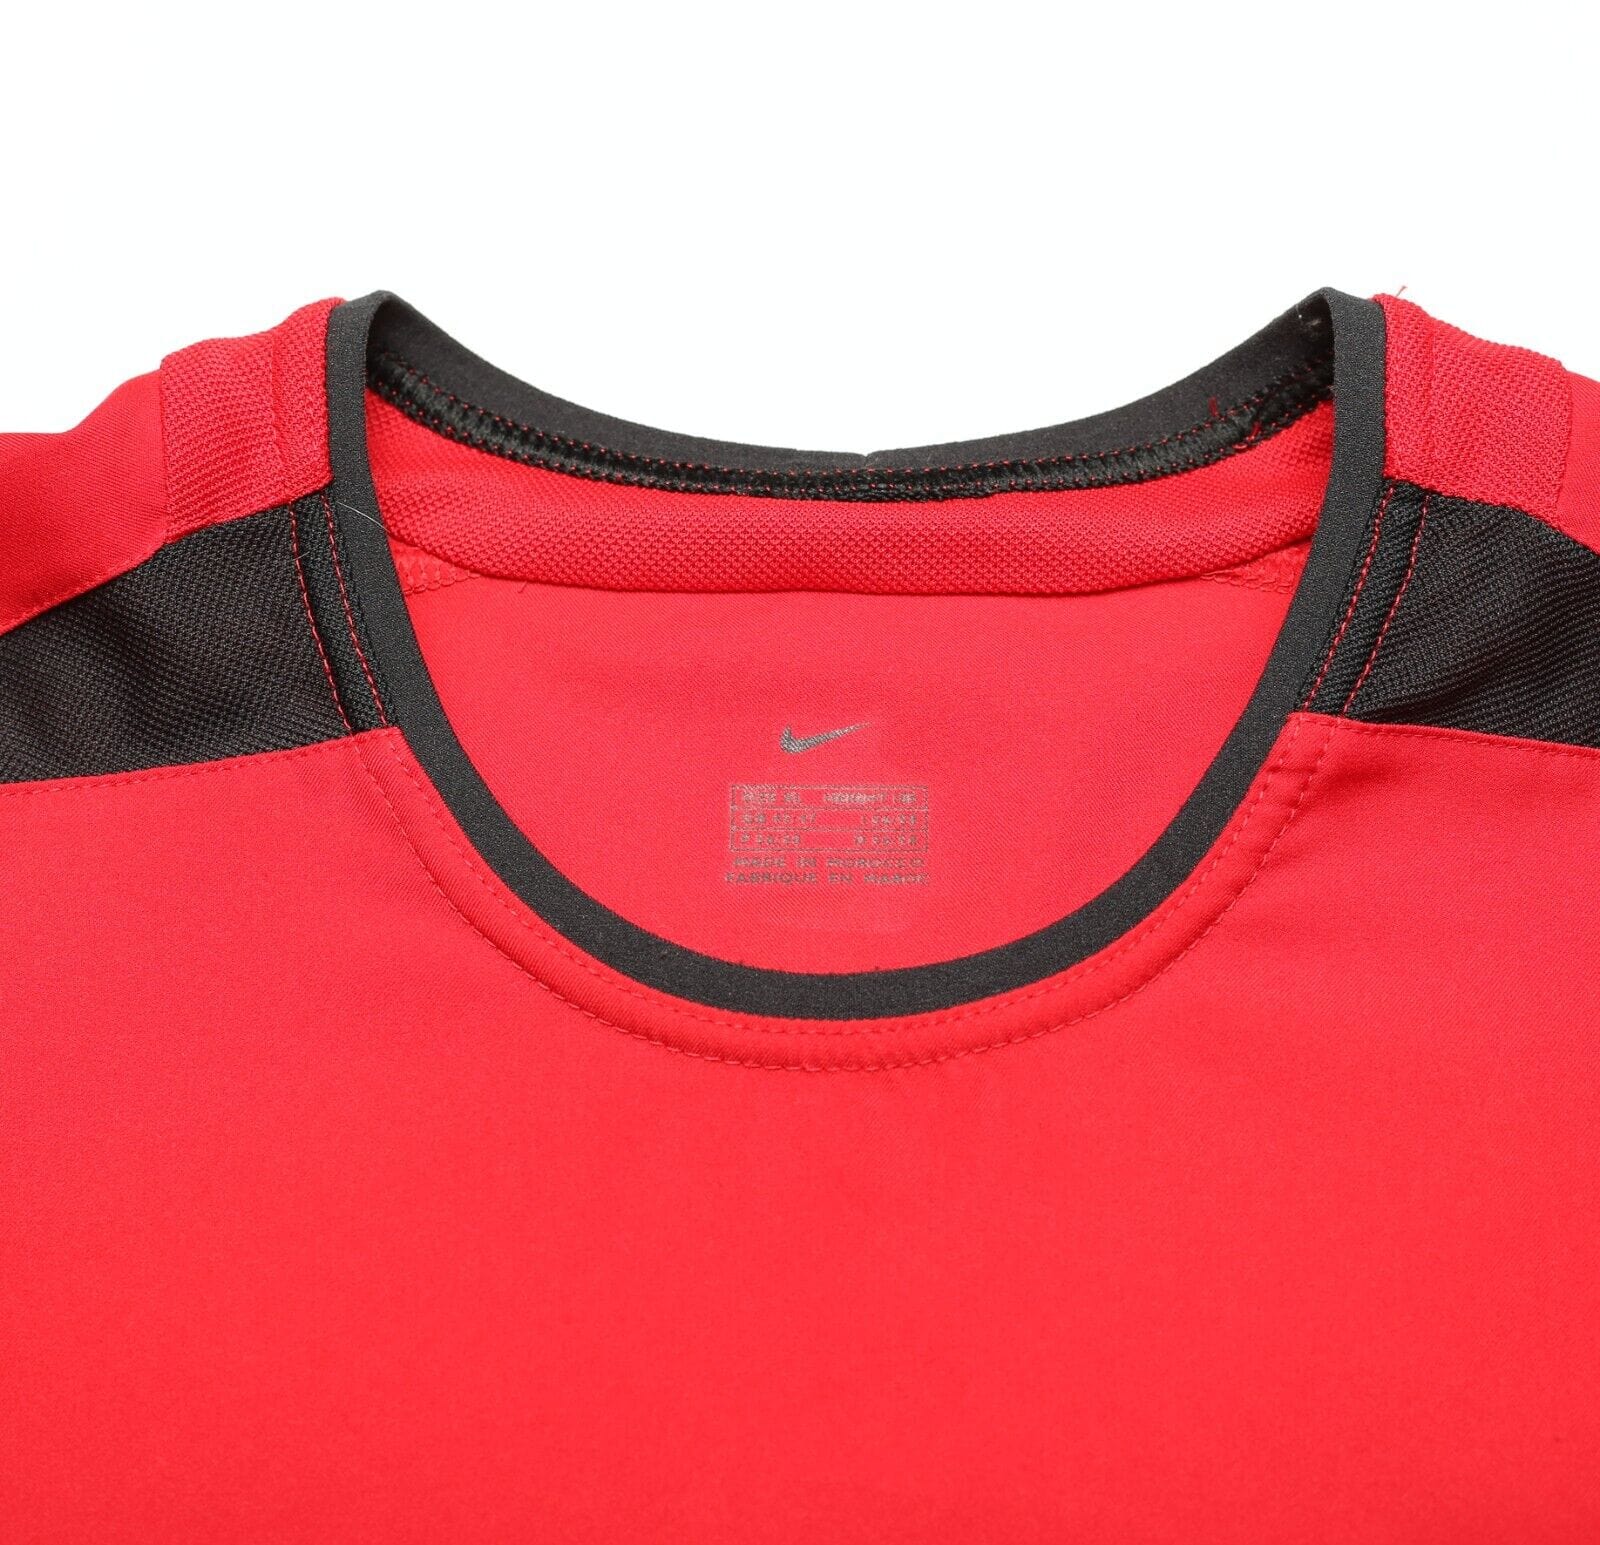 2002/04 RONALDO #7 Manchester United Vintage Nike Home Football Shirt (XL)